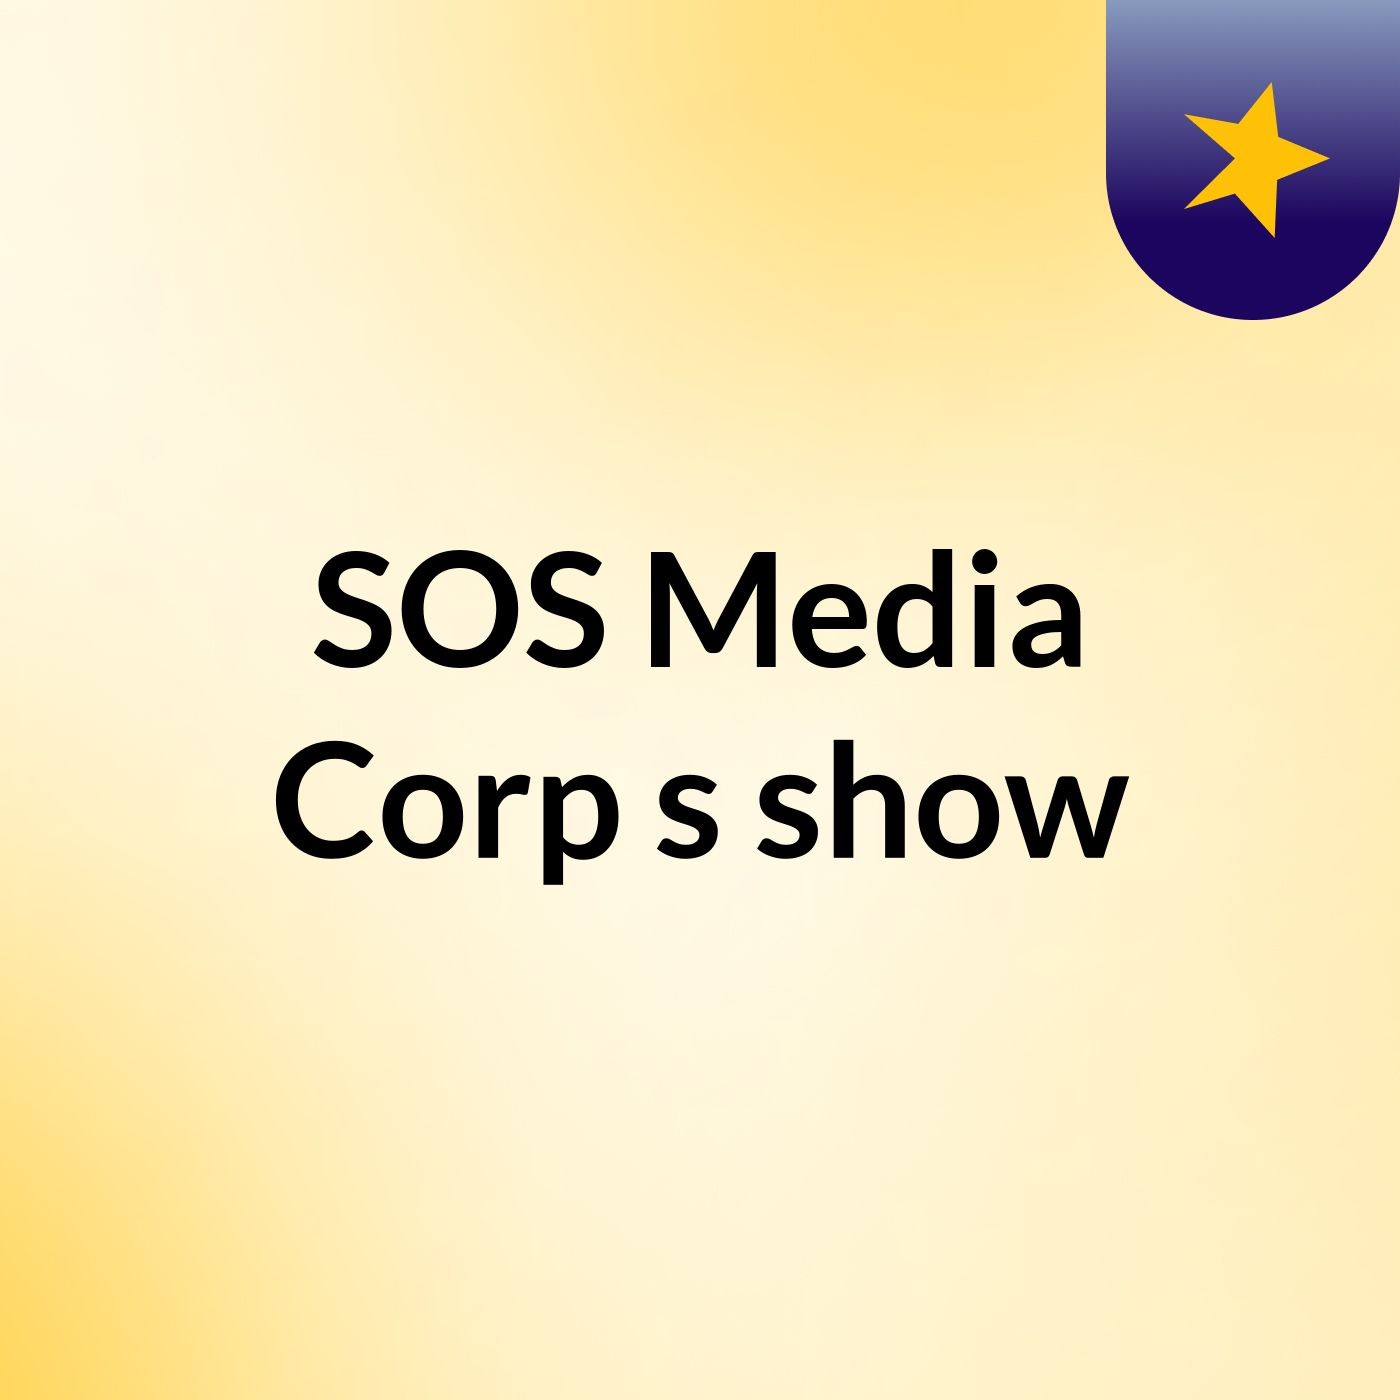 SOS Media Corp's show